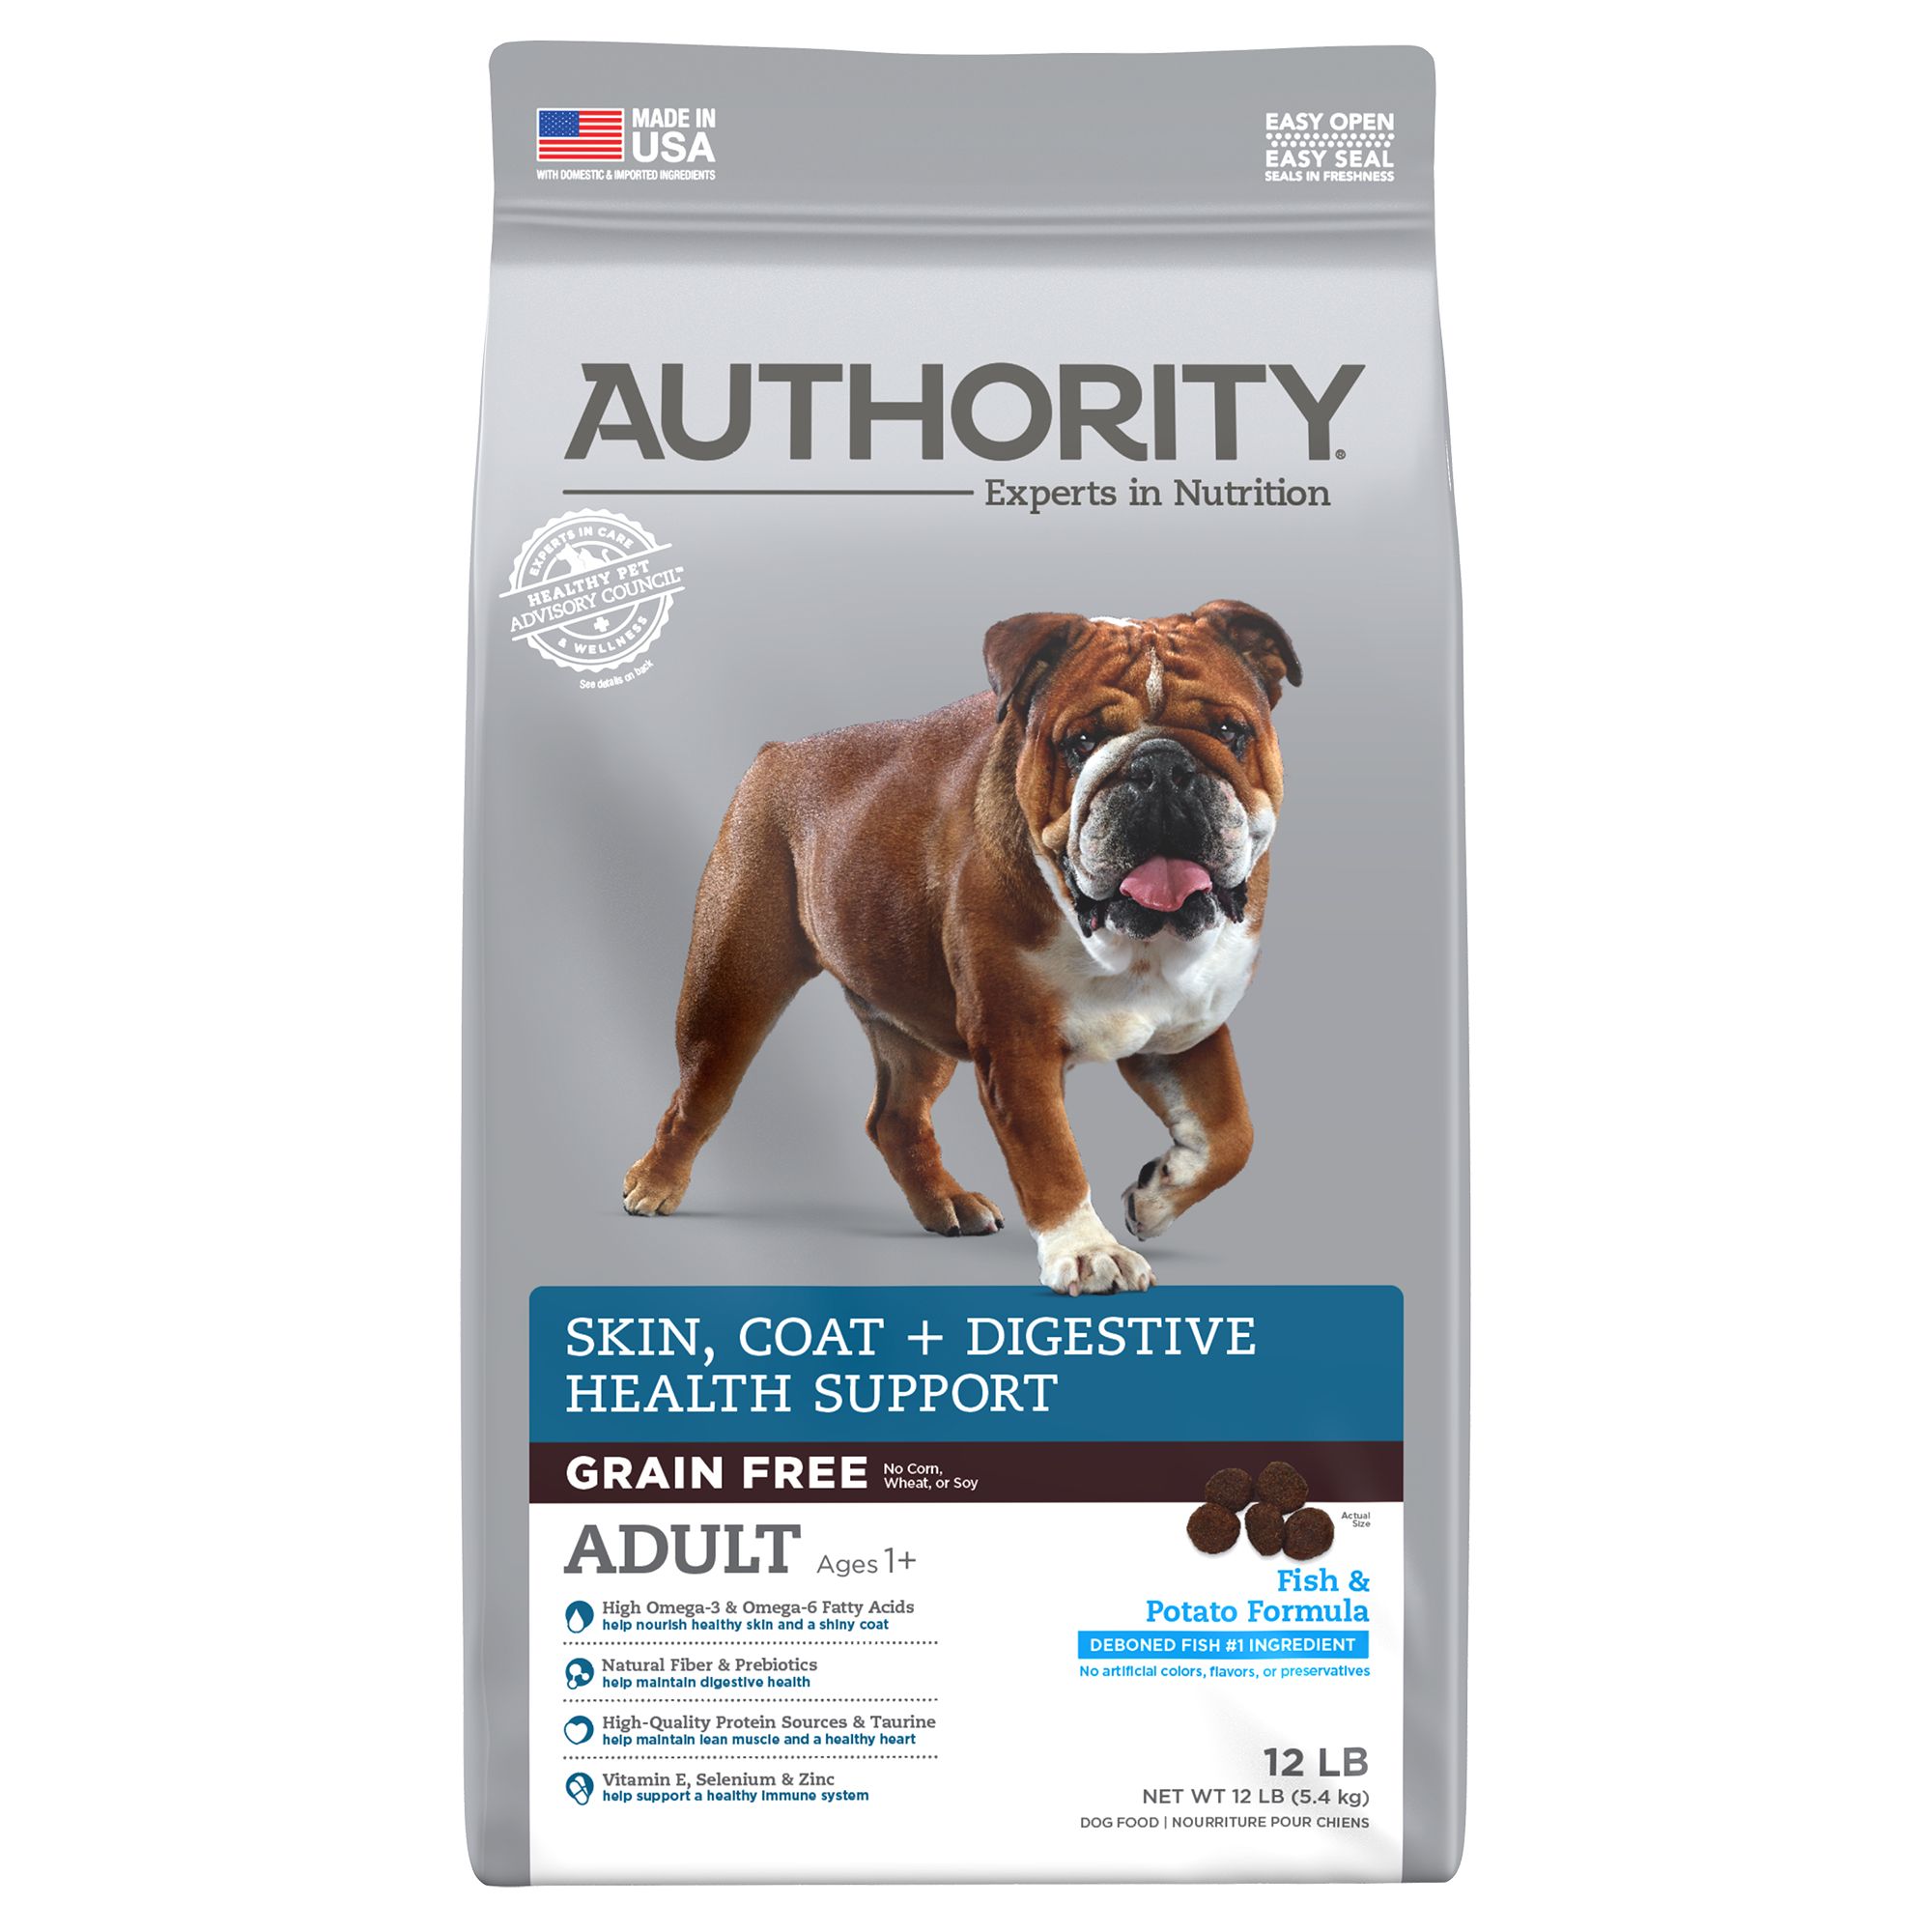 Authority Skin Coat Digestive Health Support Adult Dog Food Fish Potato Grain Free Dog Dry Food Petsmart